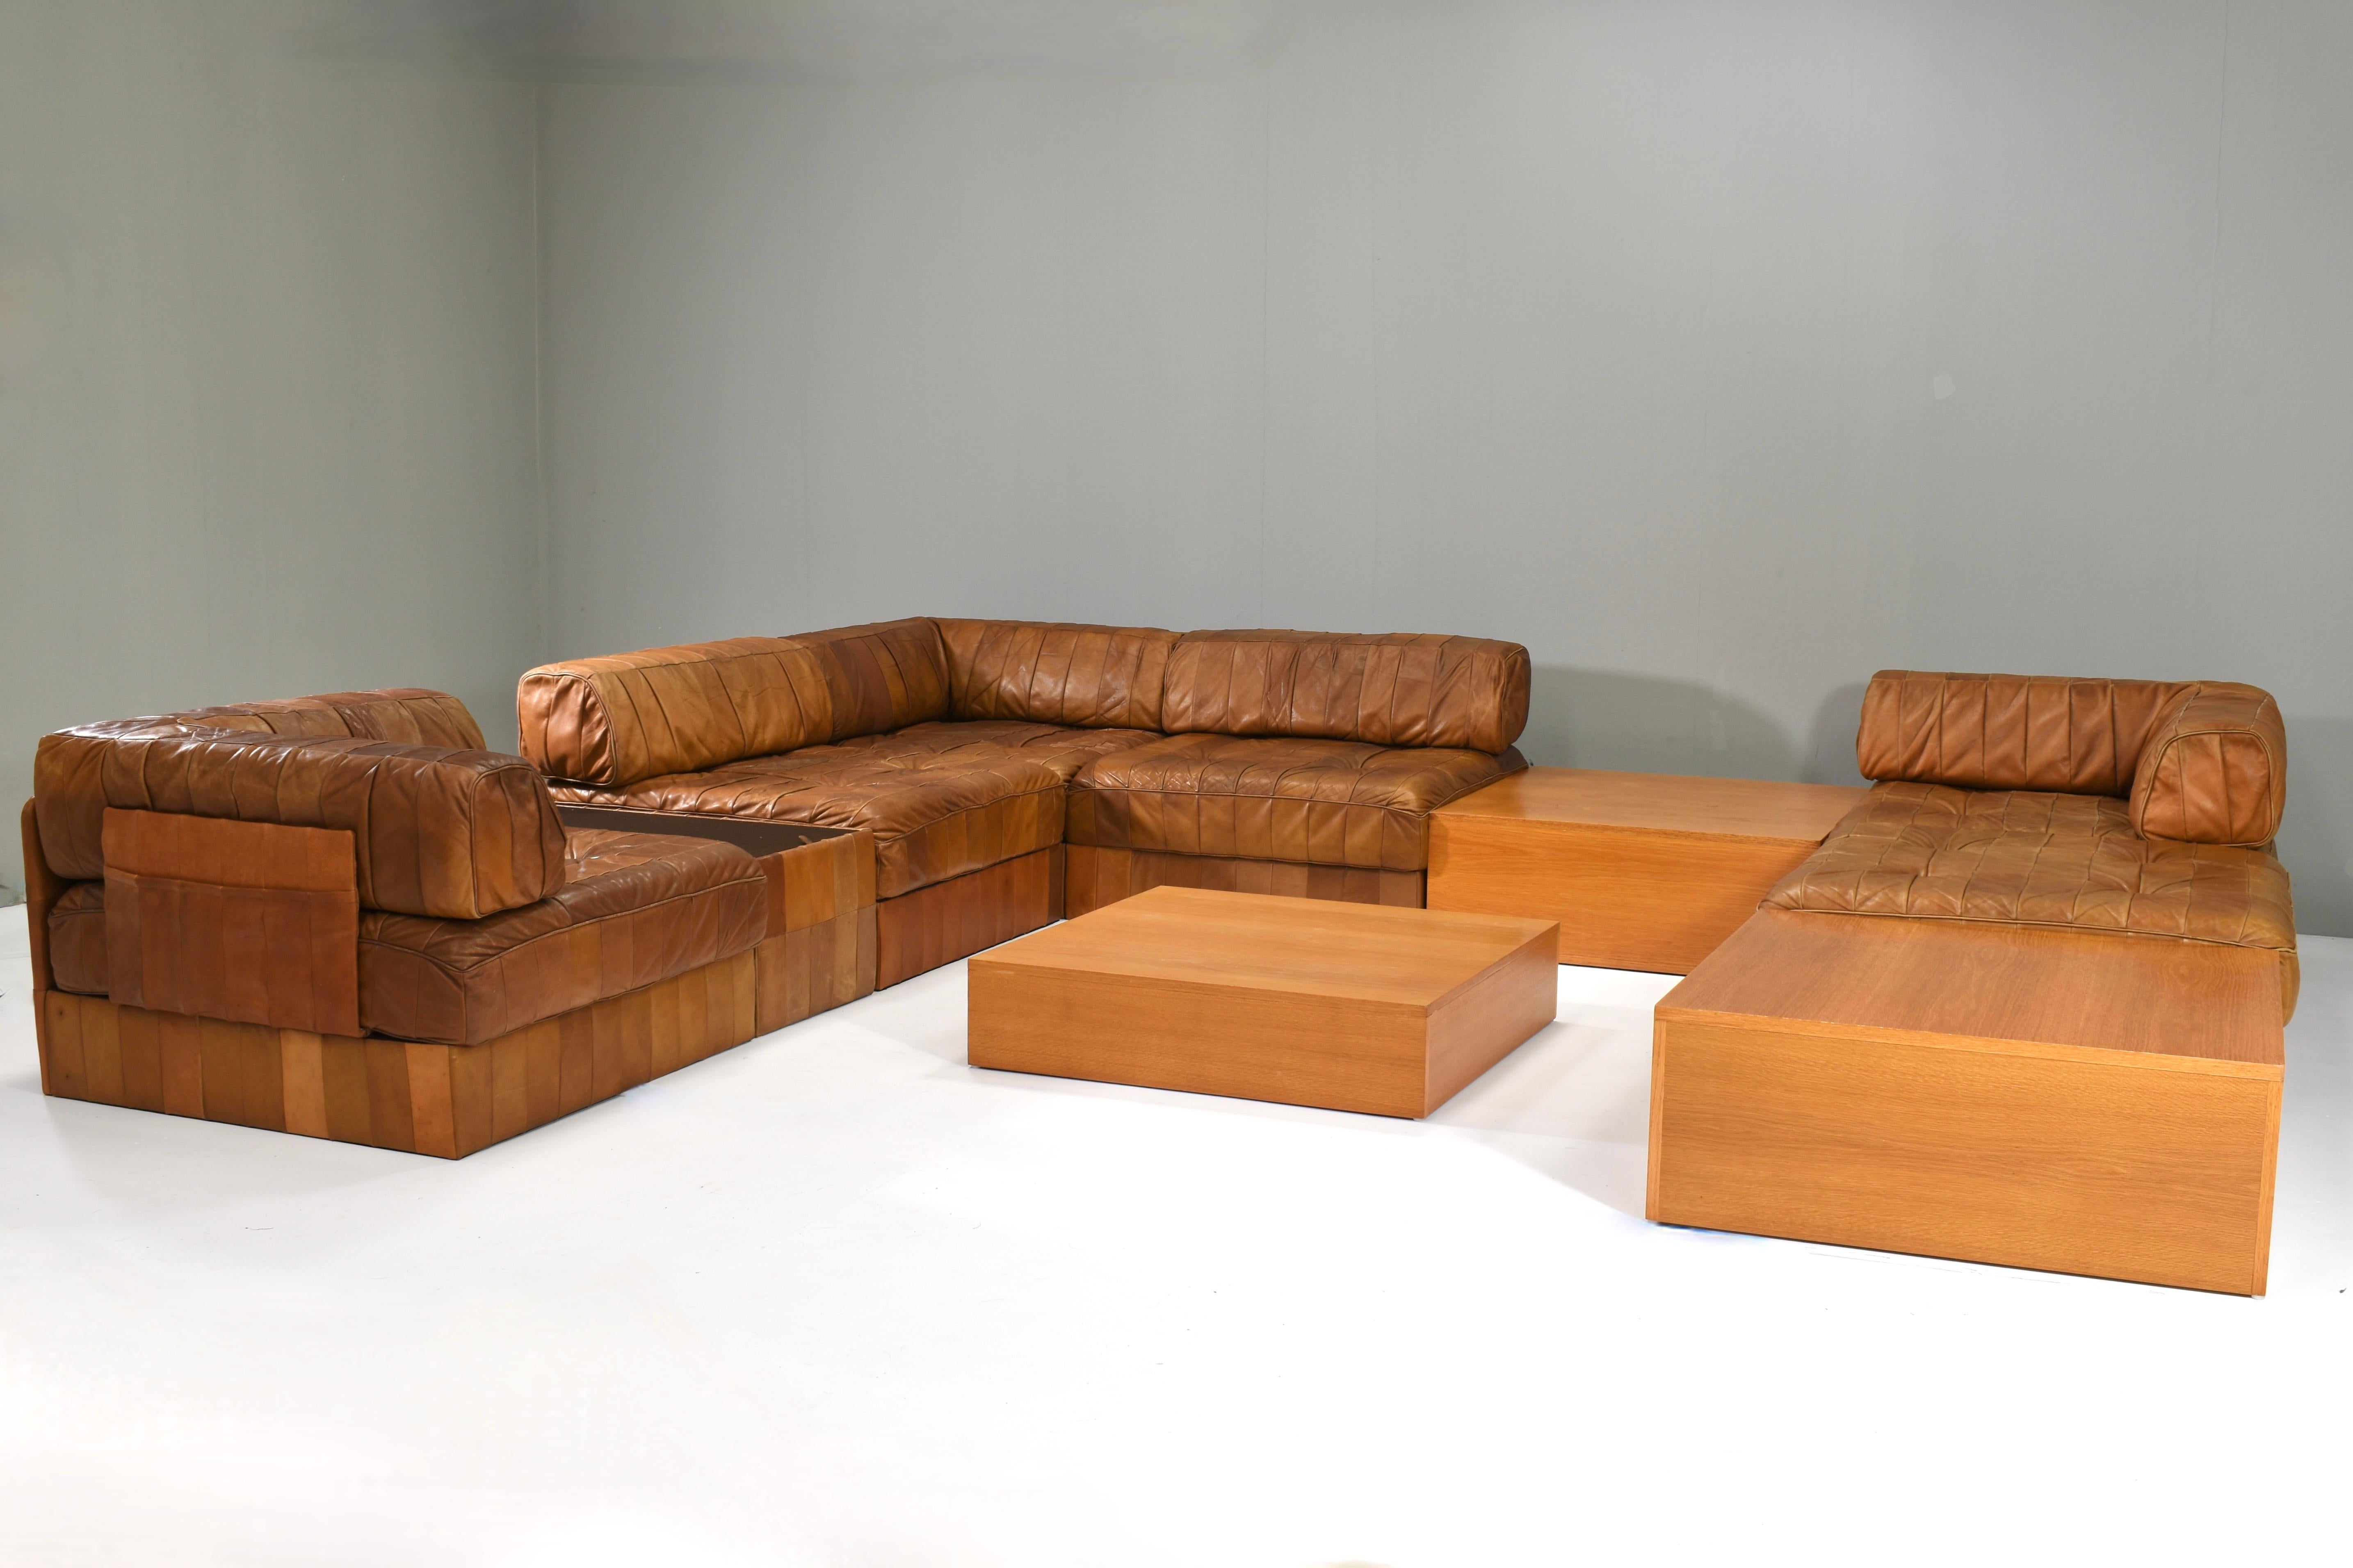 Swiss De Sede DS-88 Sectional Sofa in Cognac Brown Tan Leather, Switzerland, 1970's For Sale